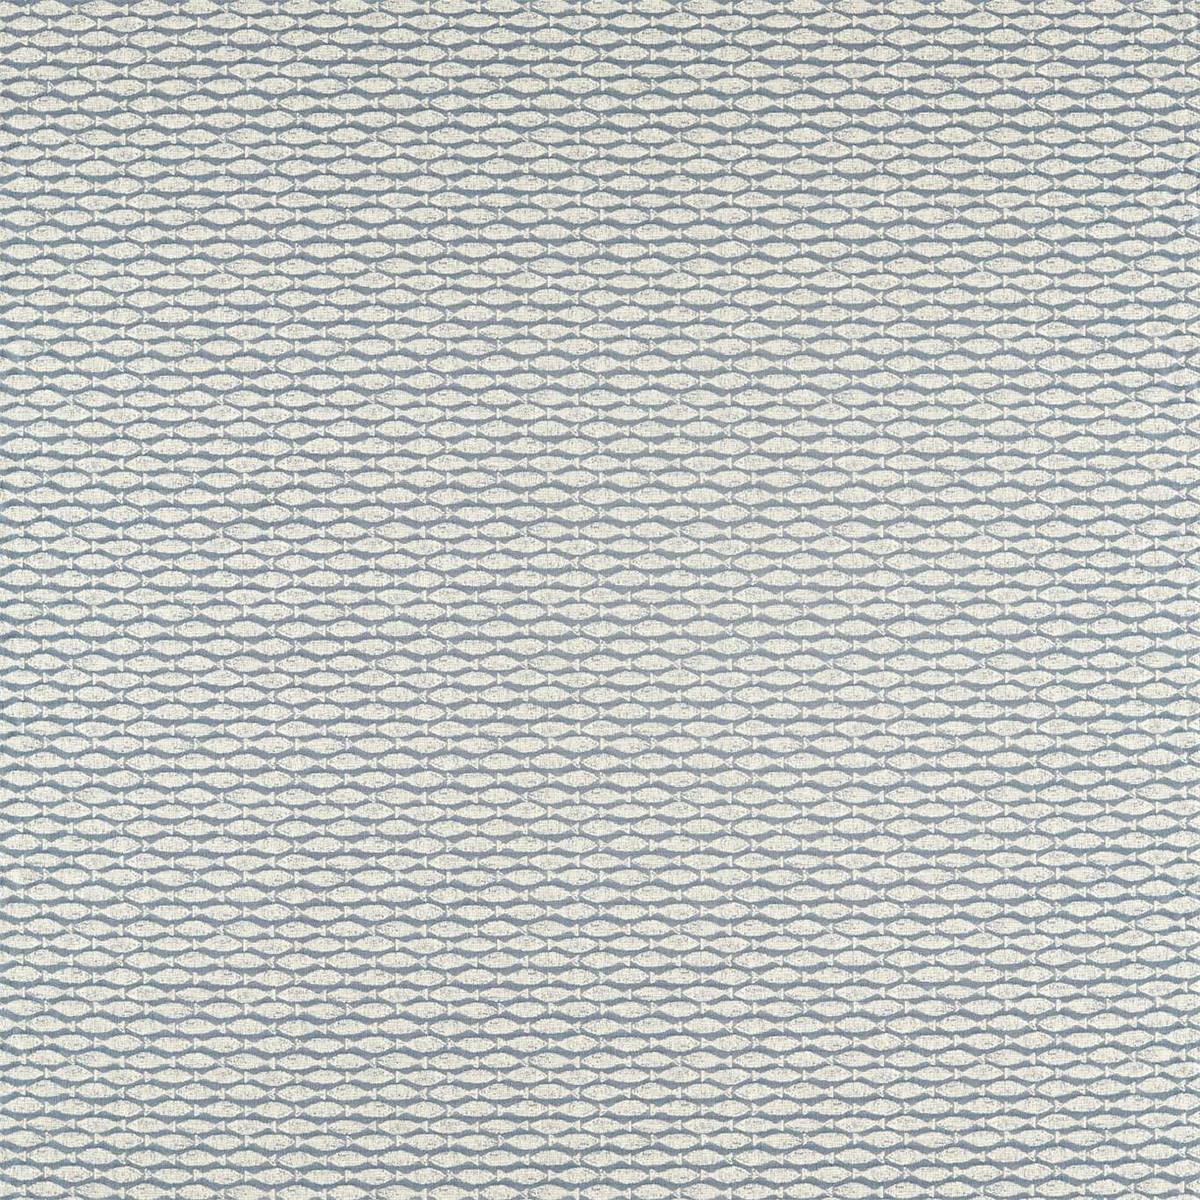 Samaki Indigo Fabric by Scion